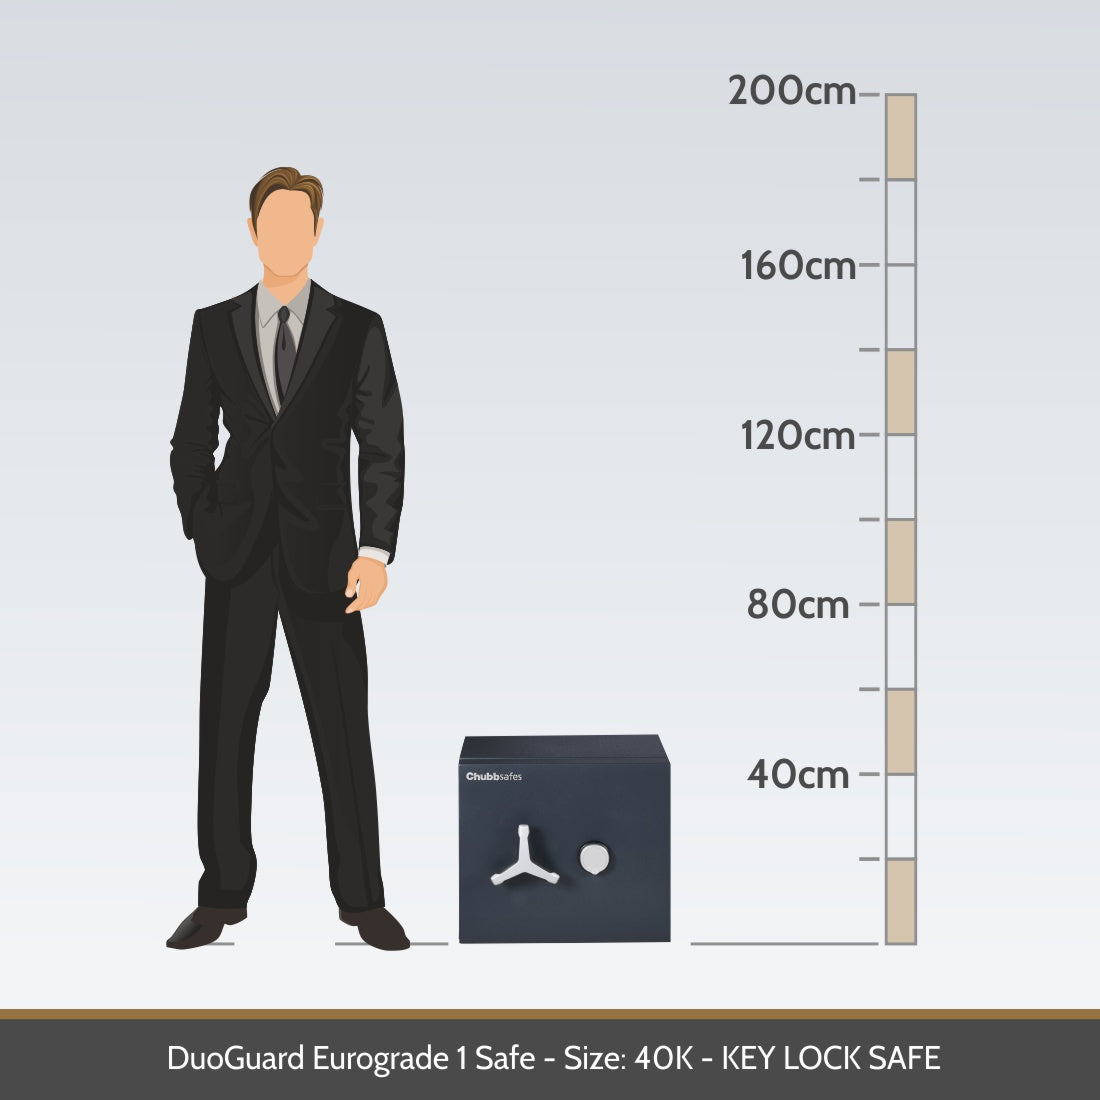 Chubbsafes, DuoGuard Eurograde 1 Safe - Size: 40K - KEY LOCK